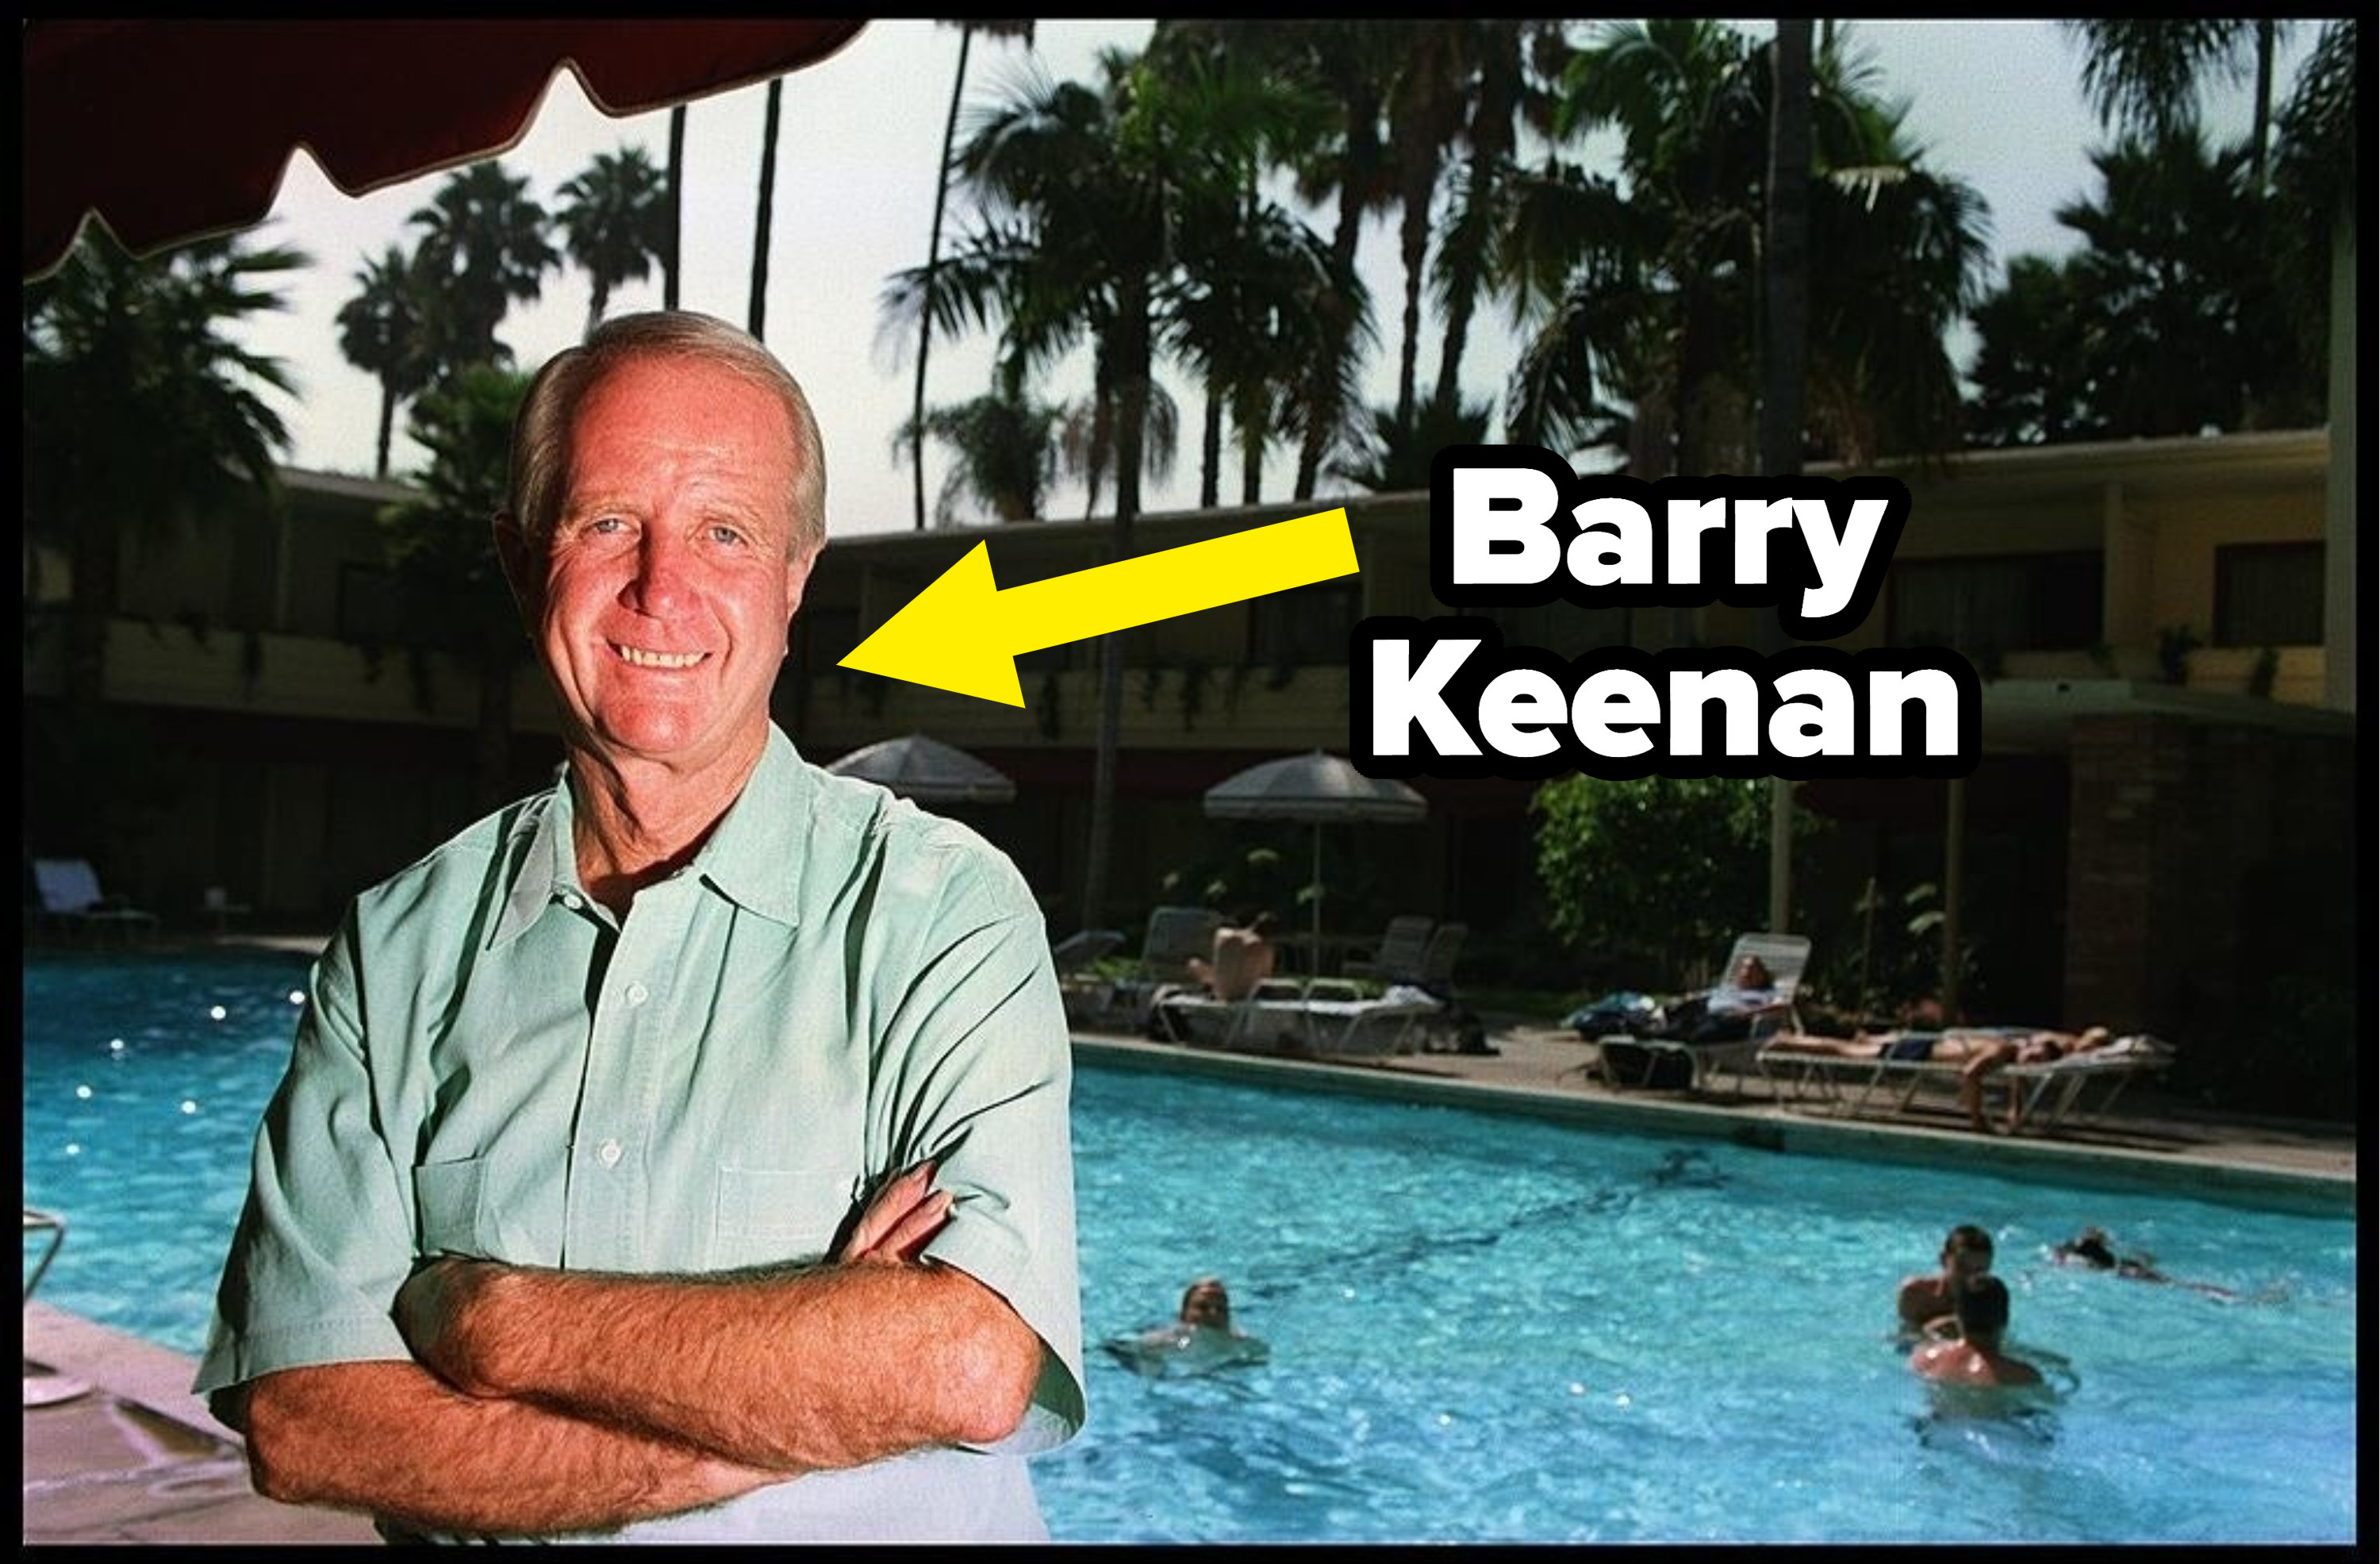 Kennan smiling at the camera outside a pool